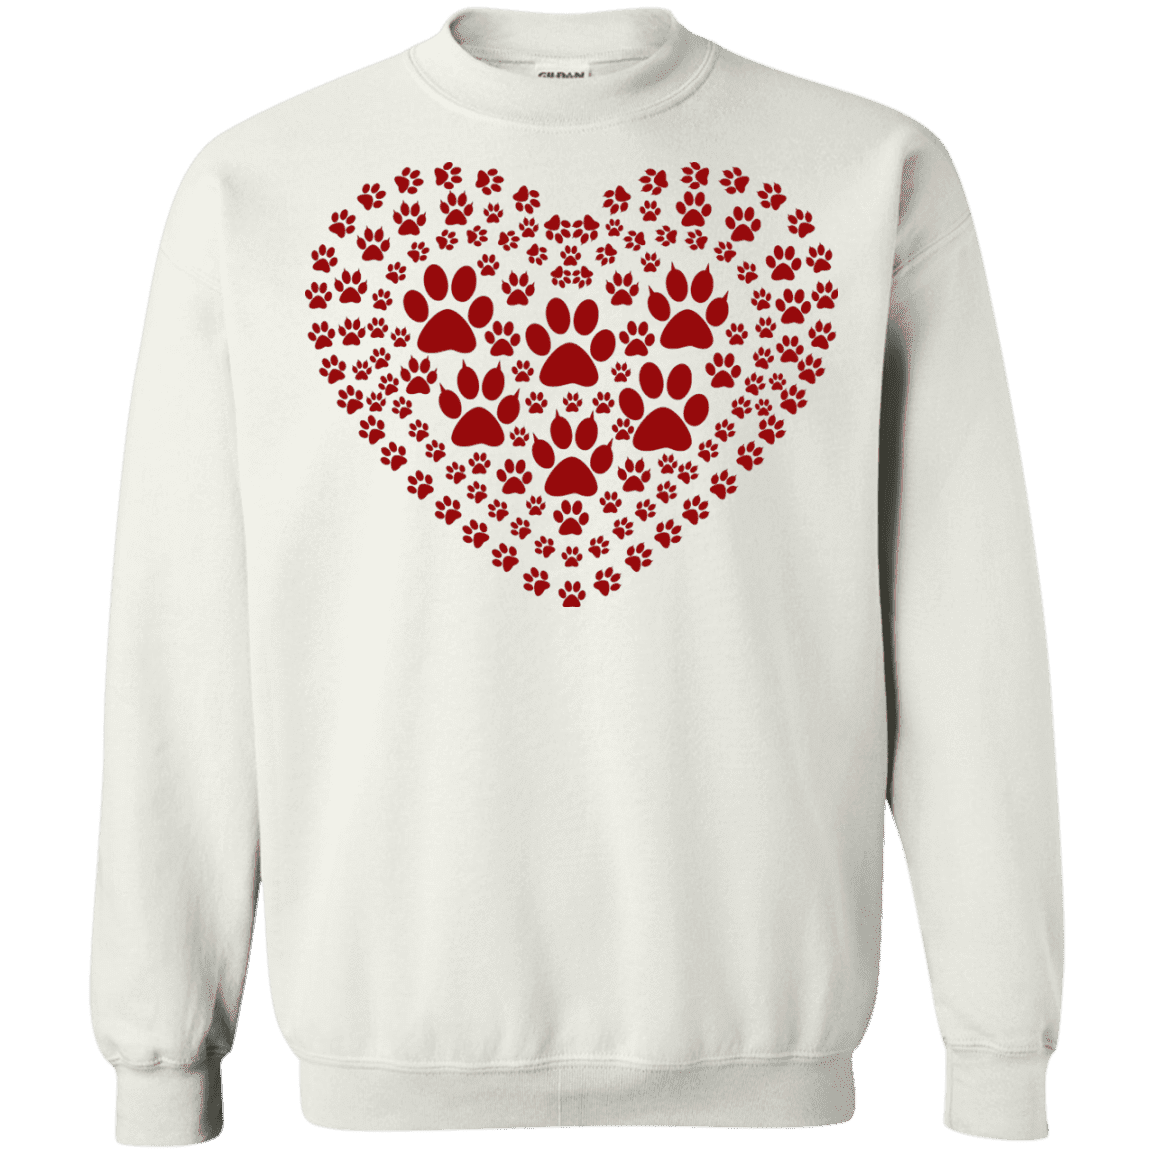 pawprint-heart-sweatshirt-rescuers-club